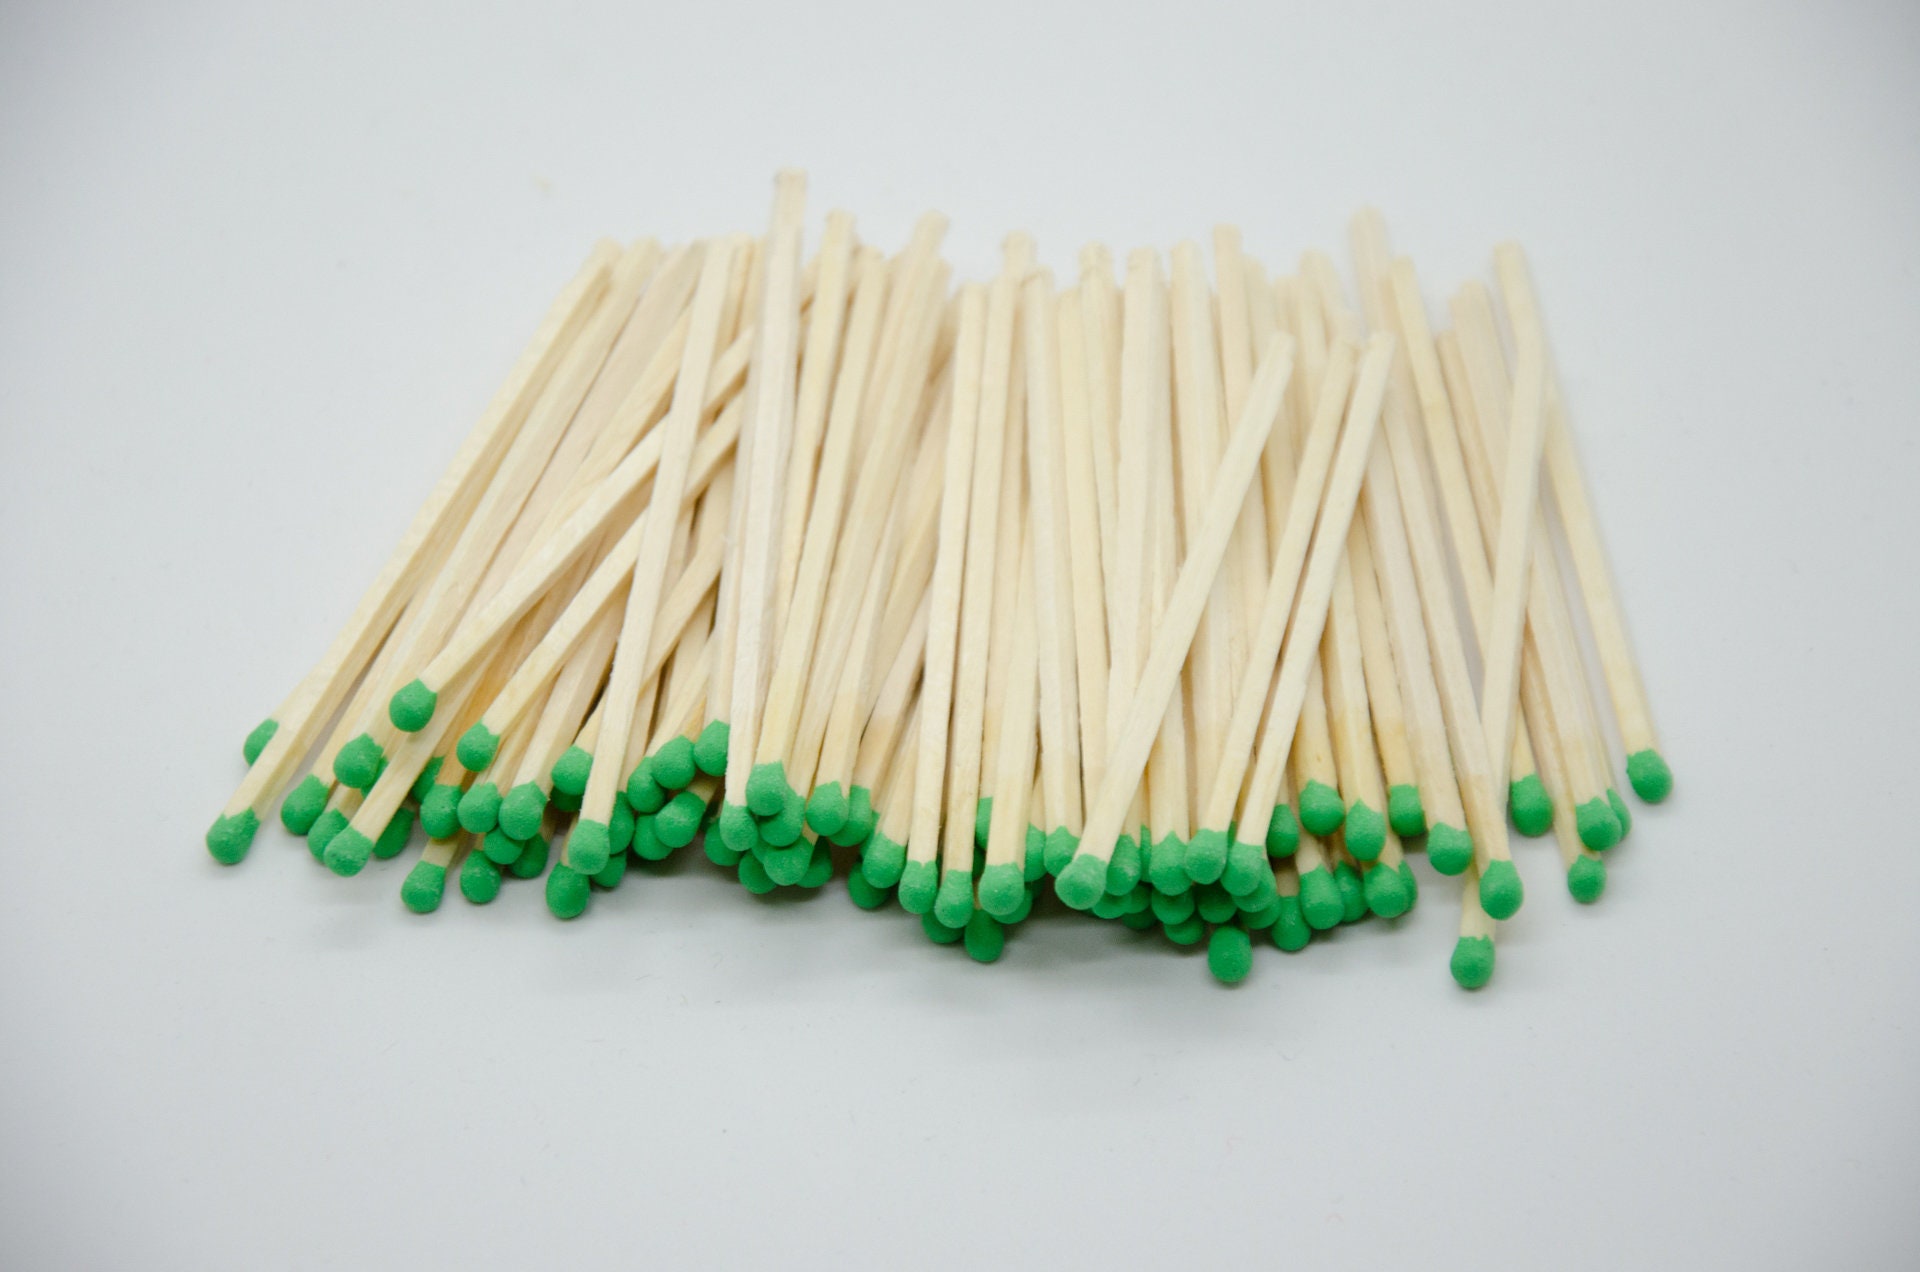 150 Matches, 3.4 Long Colorful Tip Wooden Matchsticks for Home Decor,  Crafts, Design, Matchbox or Jar Filling 